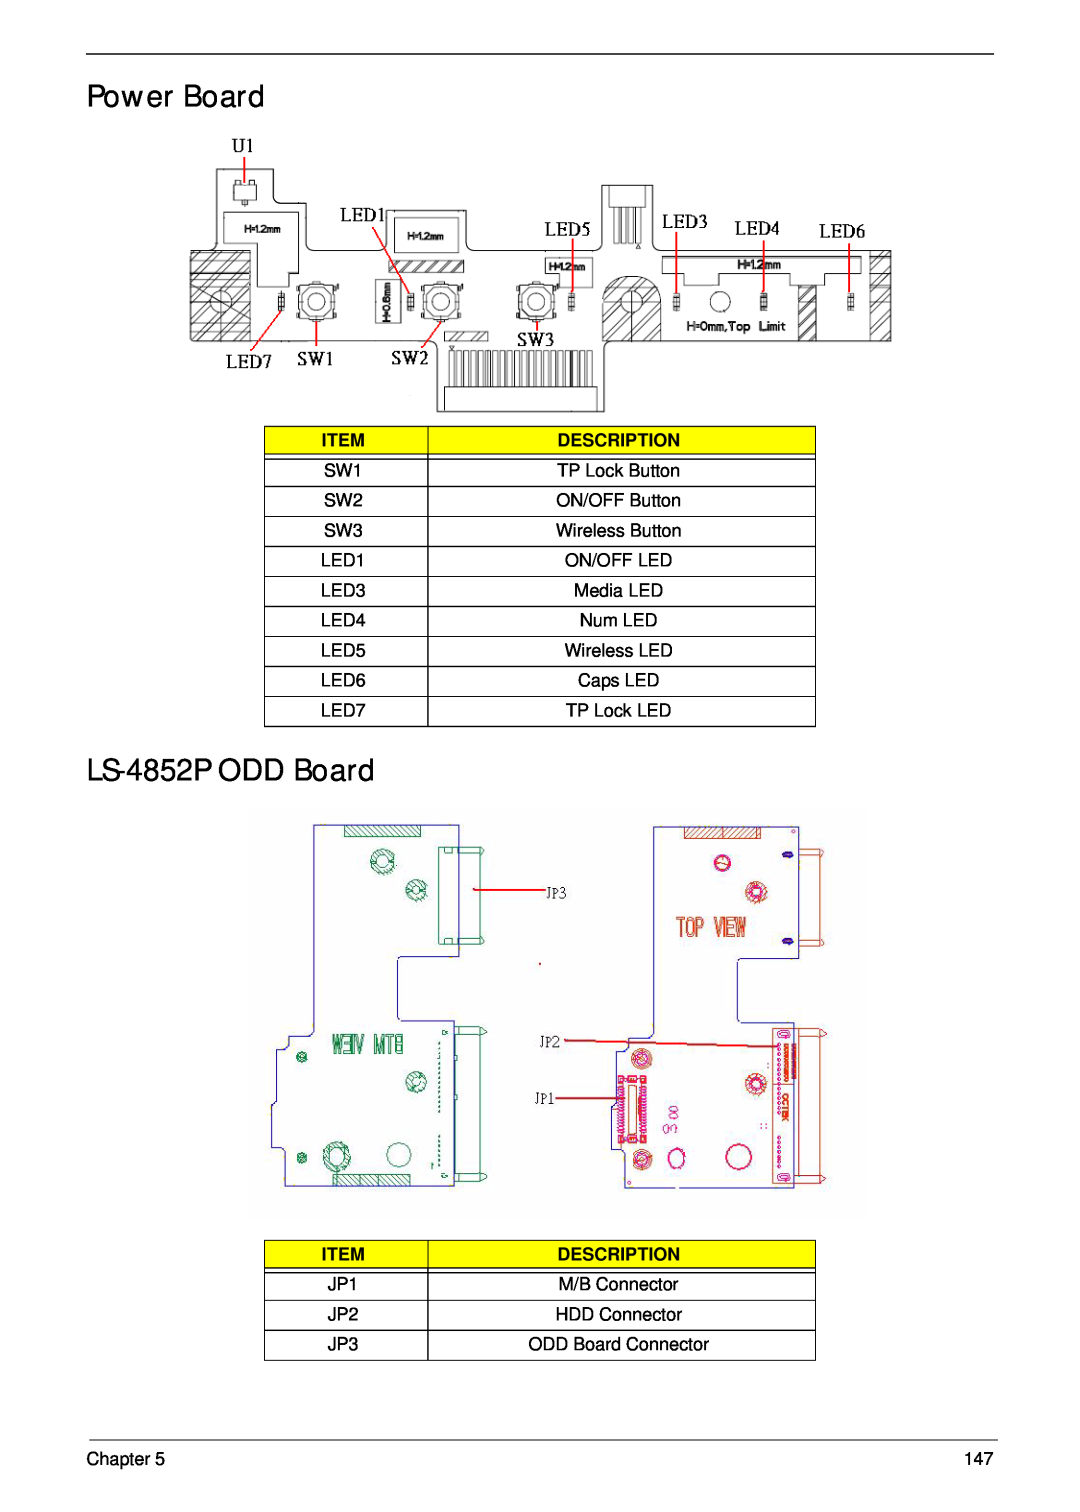 Acer 7315, 7715Z manual Power Board, LS-4852P ODD Board, Description 